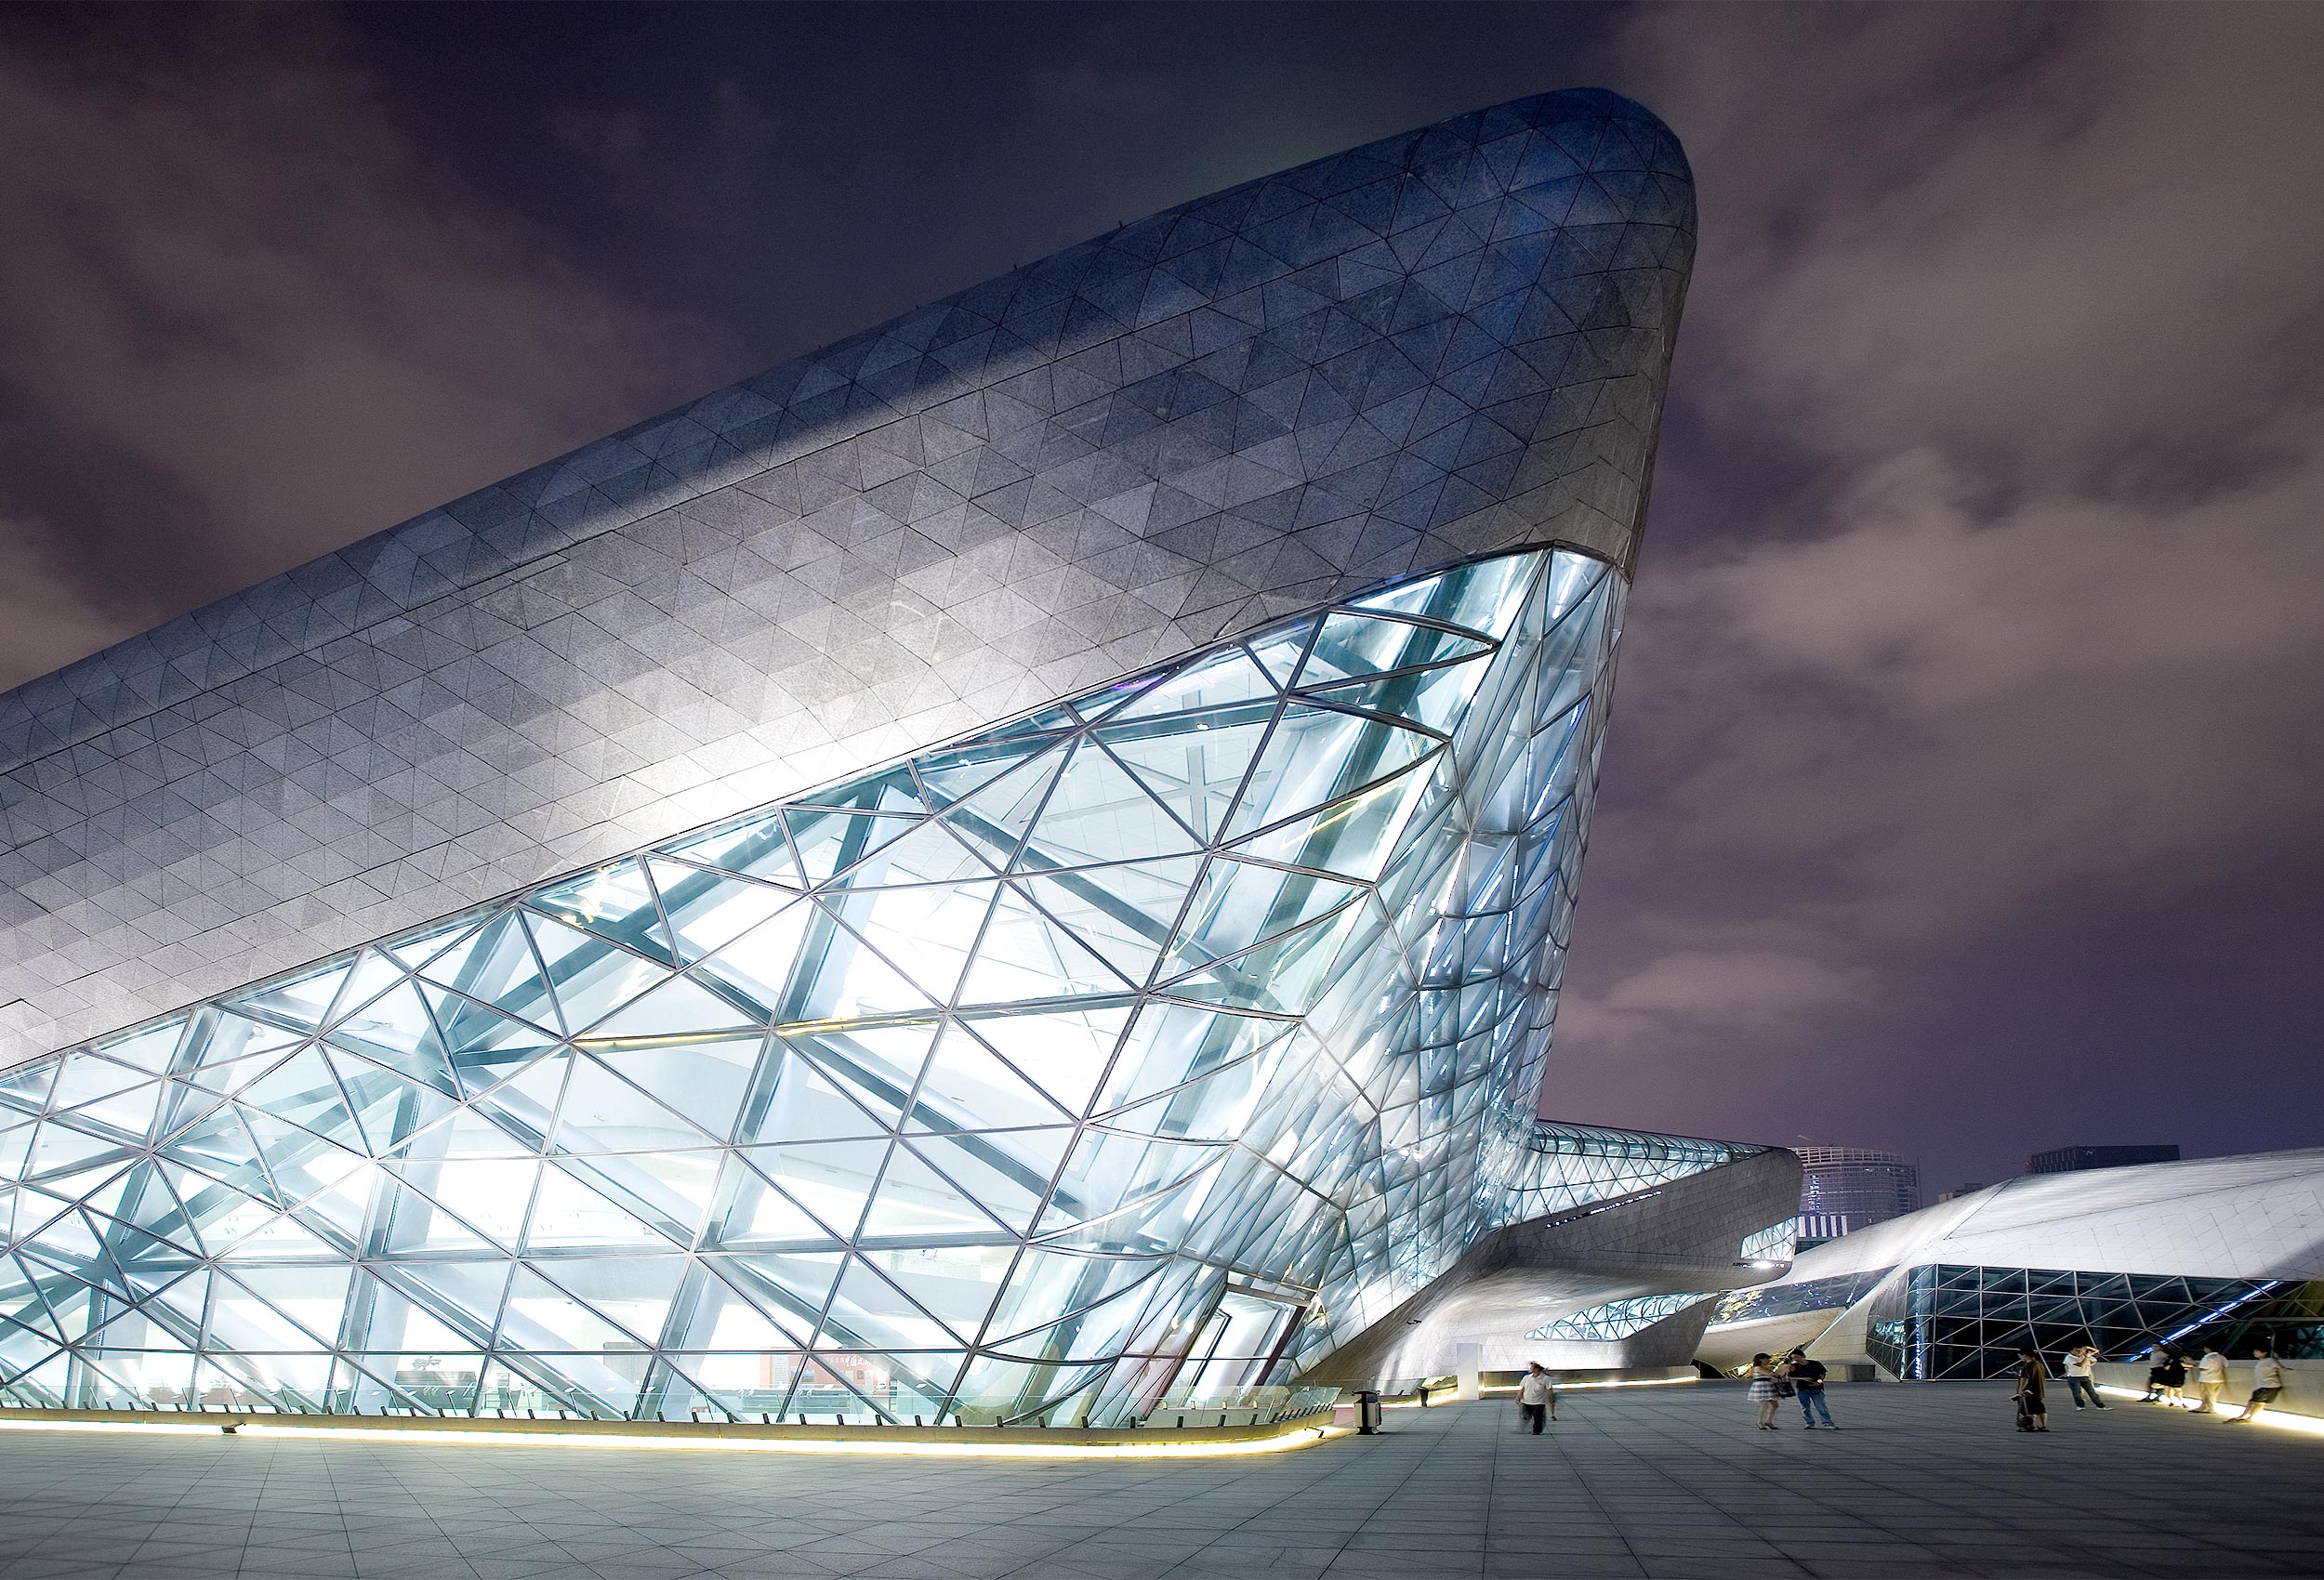 Guangzhou Opera House by architectural photographer Kristopher Grunert